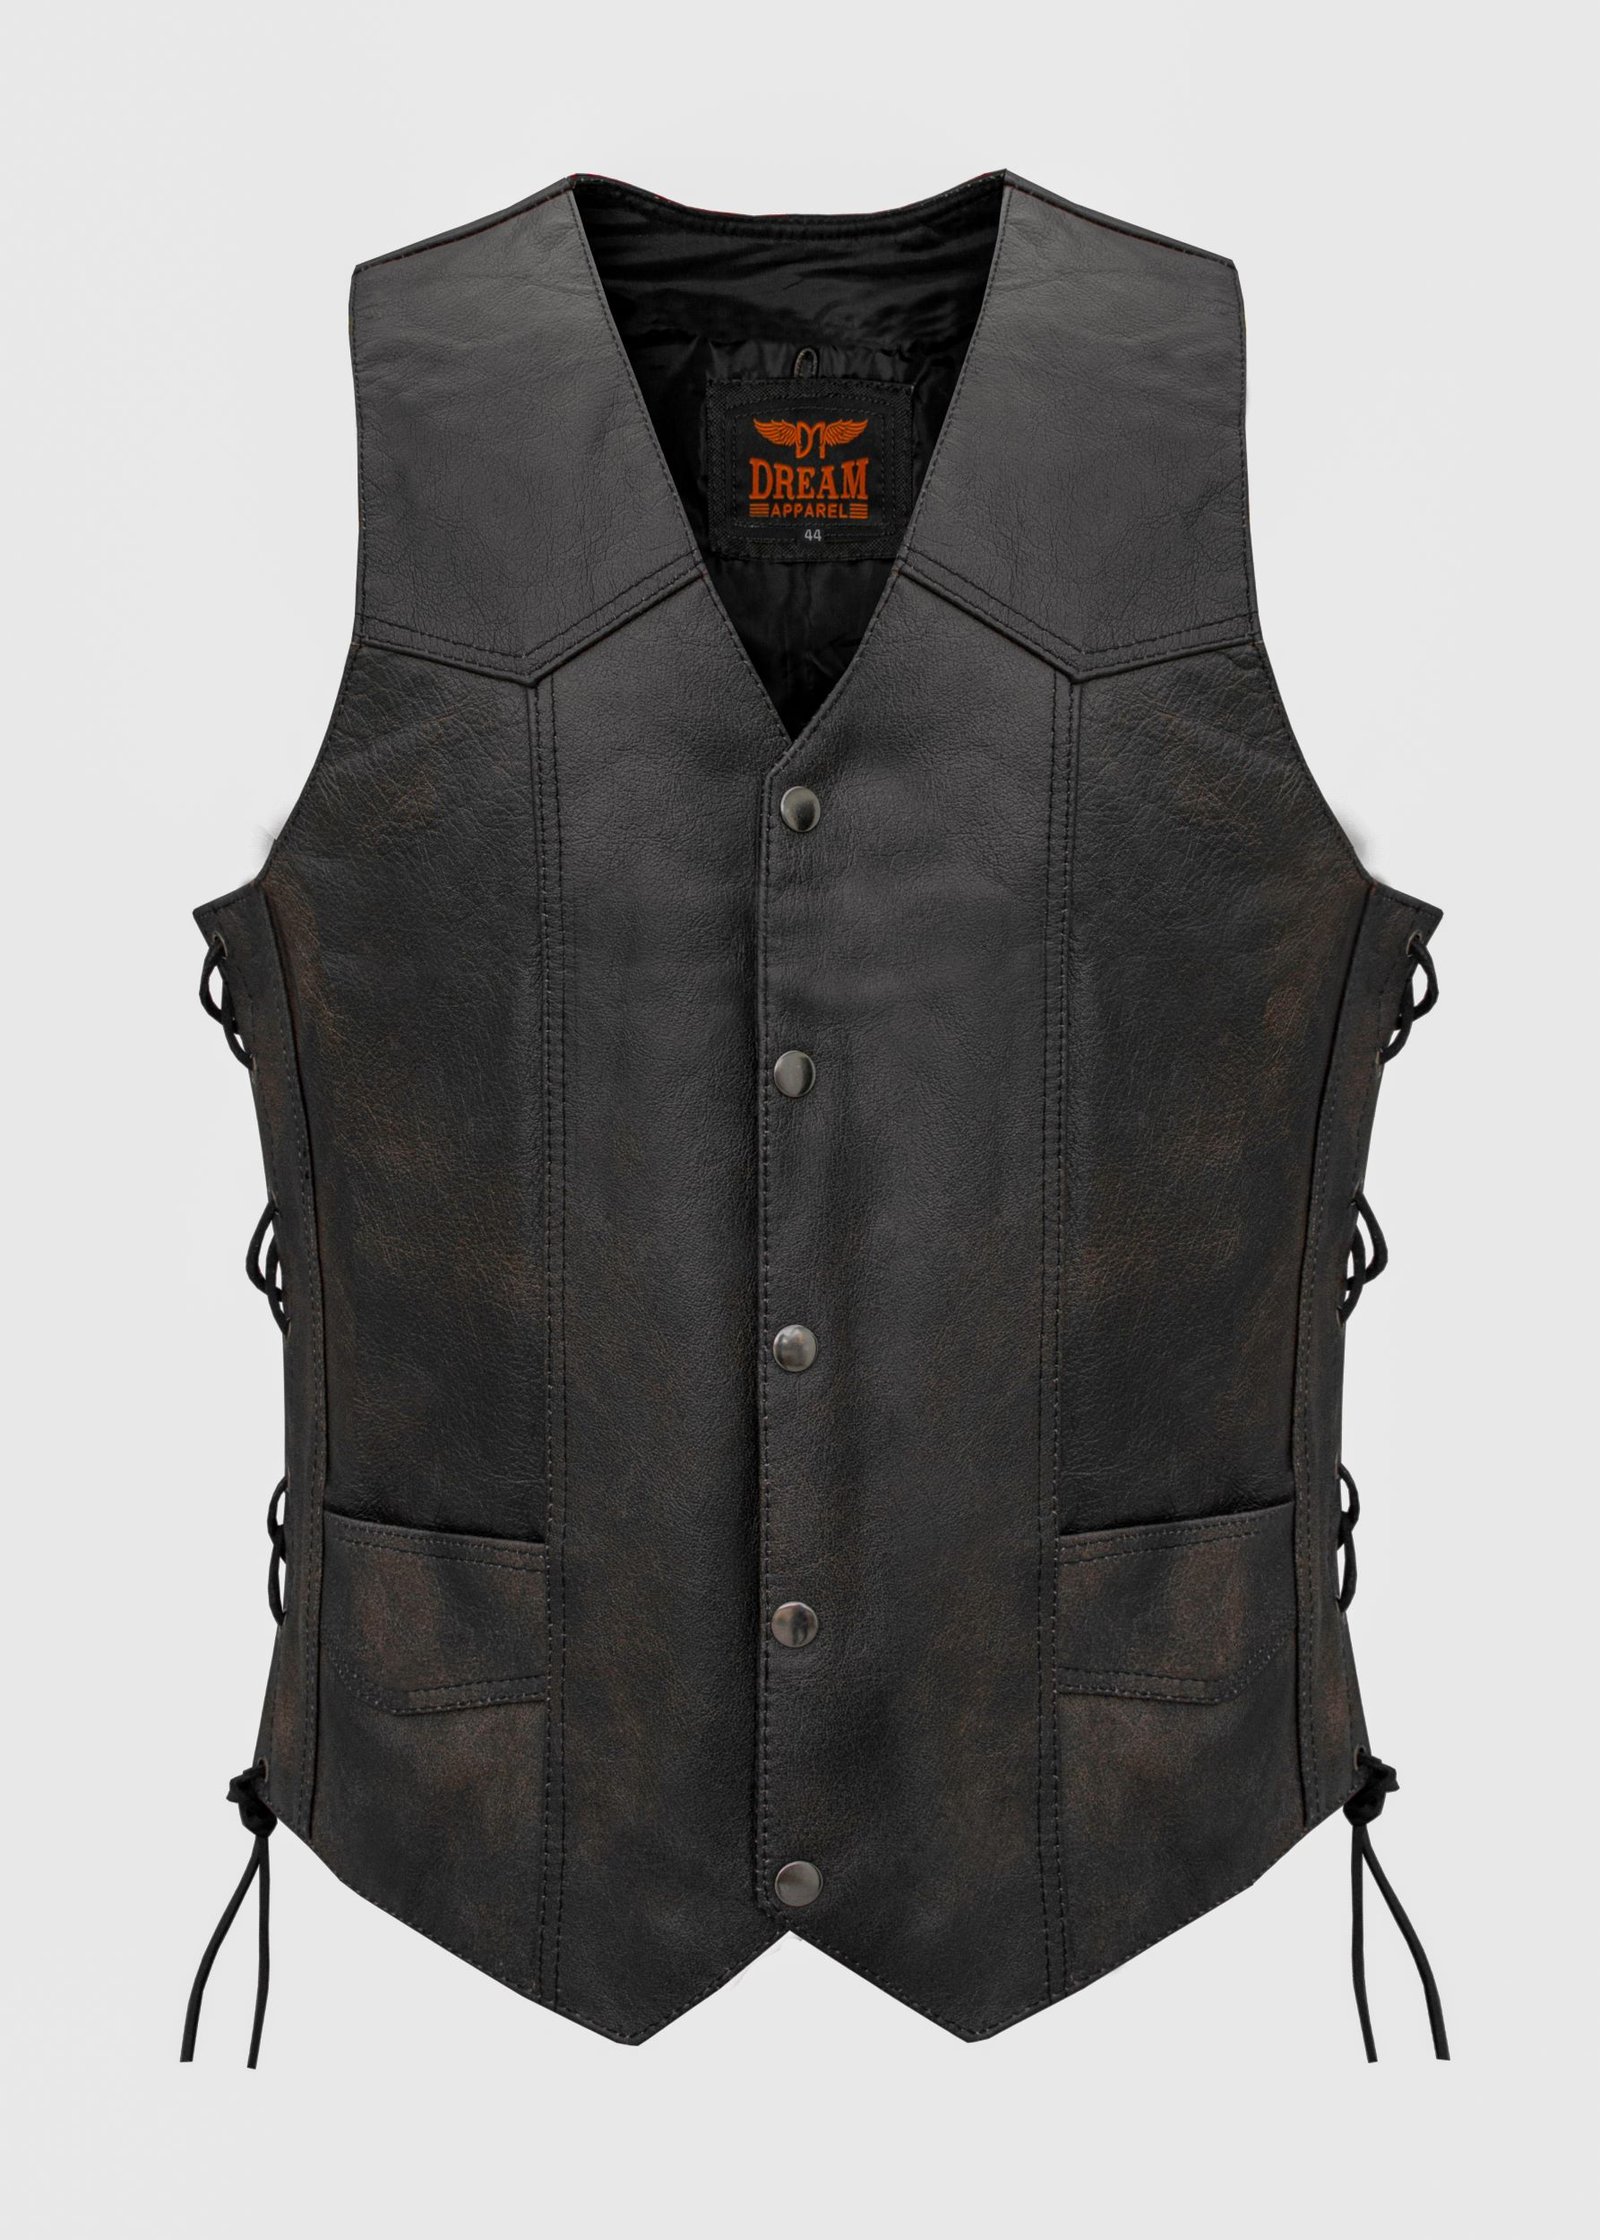 Leather Vest - Men's - Distressed Brown - Live To Ride - Eagle - Up To 60 - MV3090-12N-DL